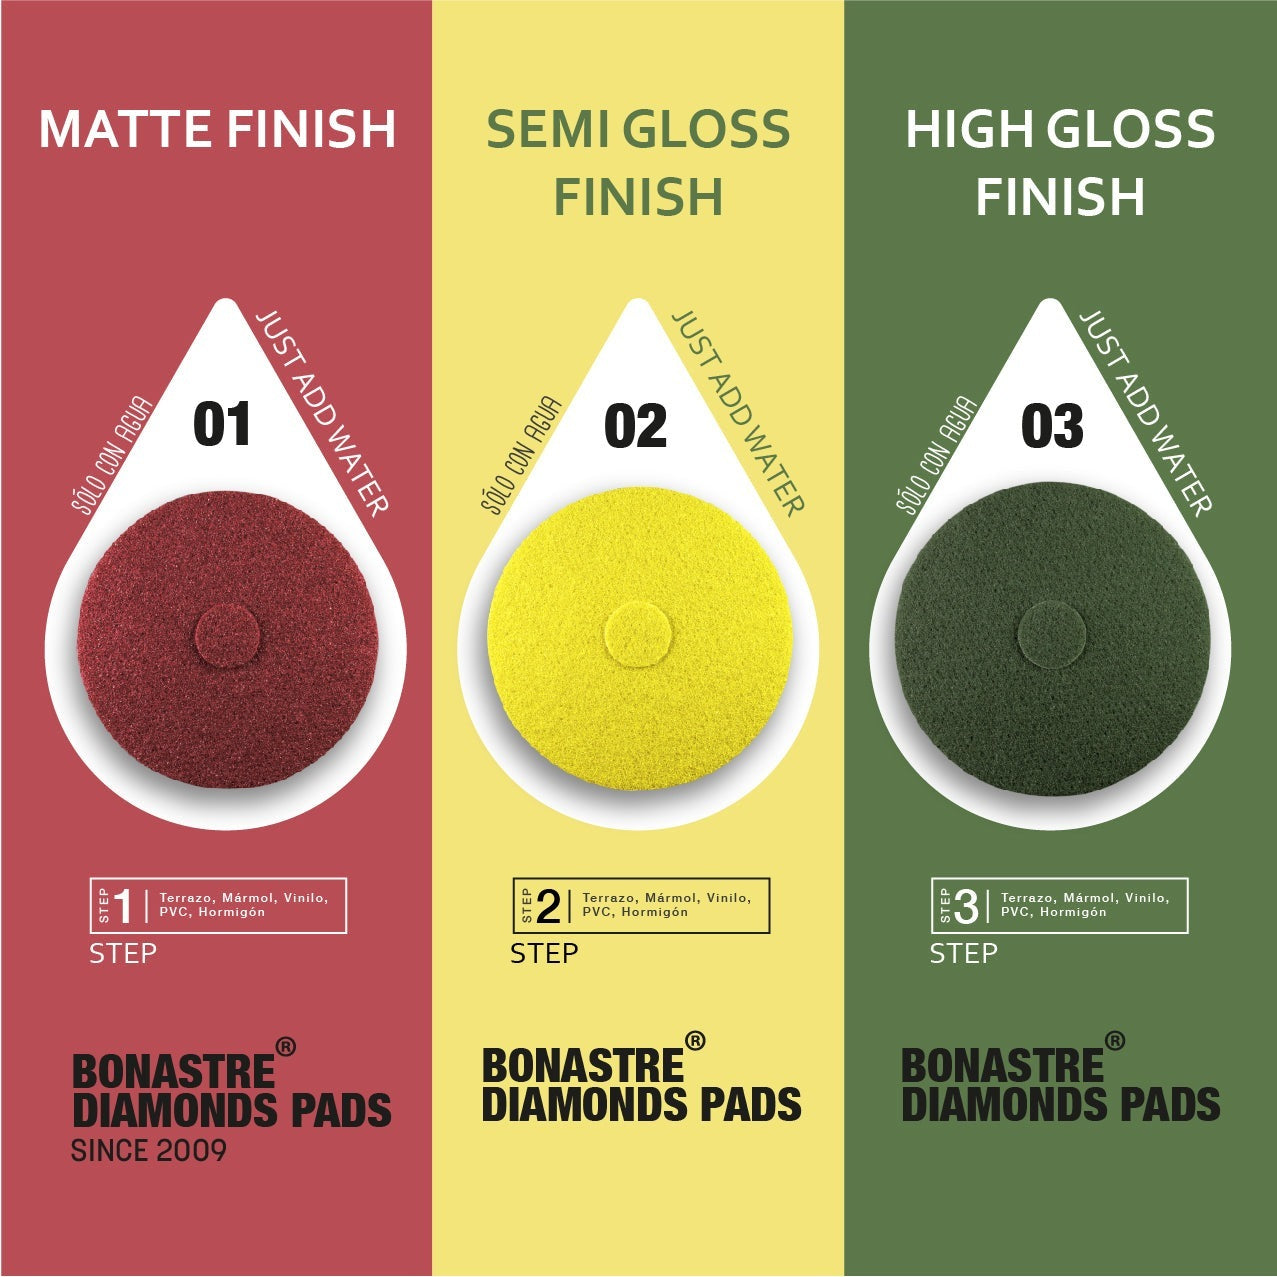 Bonastre DIP Step-3 GREEN / High Gloss Finish Case of 5 - Clean Center